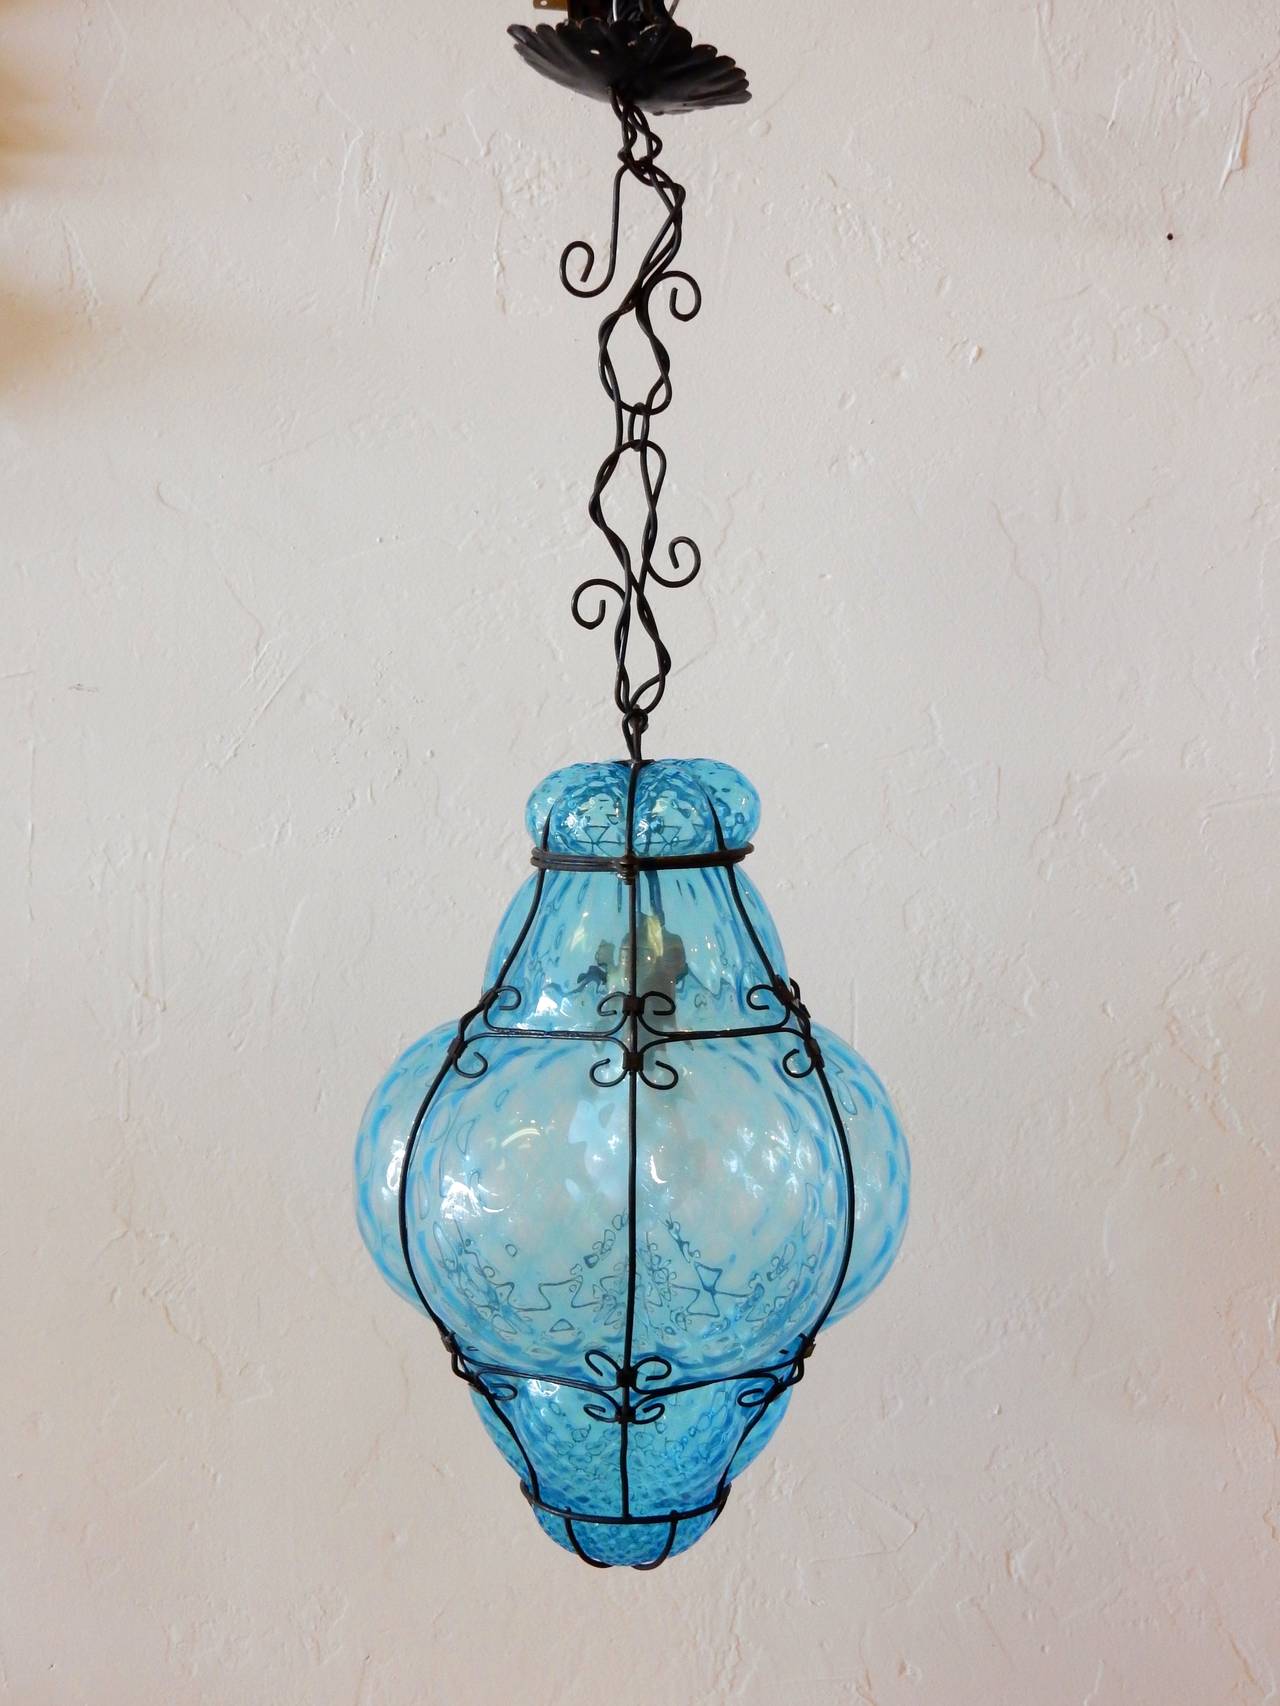 1960's Italian Murano hand blown aqua blue cage lantern pendant lamp with sculpted black iron chain and hardware.
Fabulous piece!